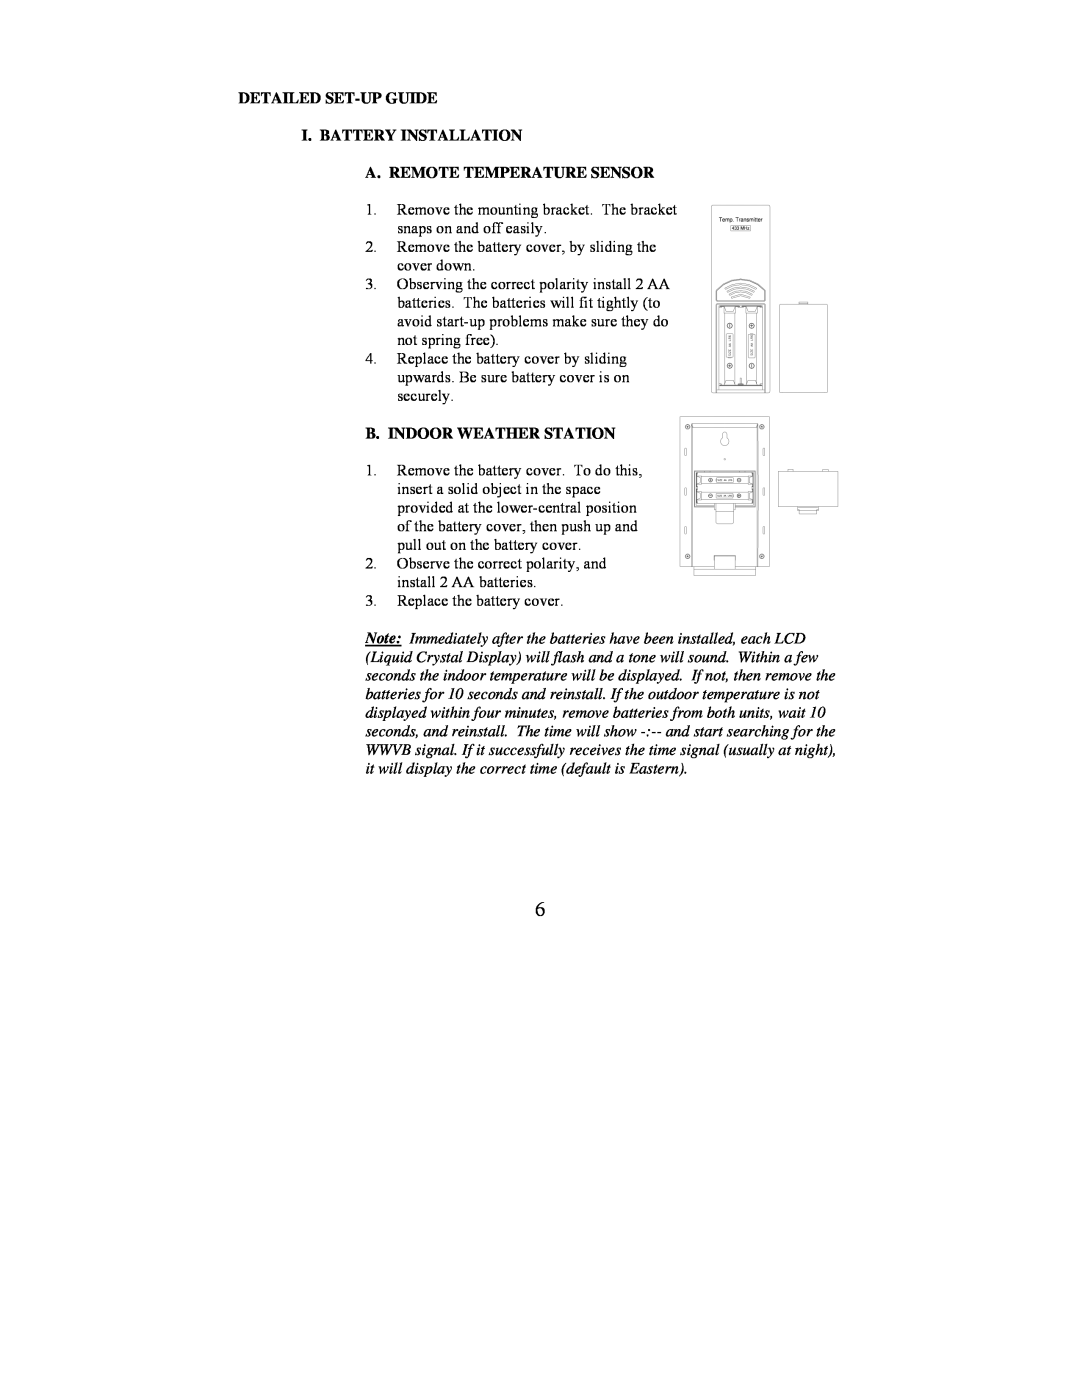 La Crosse Technology WS-9210U Detailed Set-Up Guide I. Battery Installation, A. Remote Temperature Sensor 